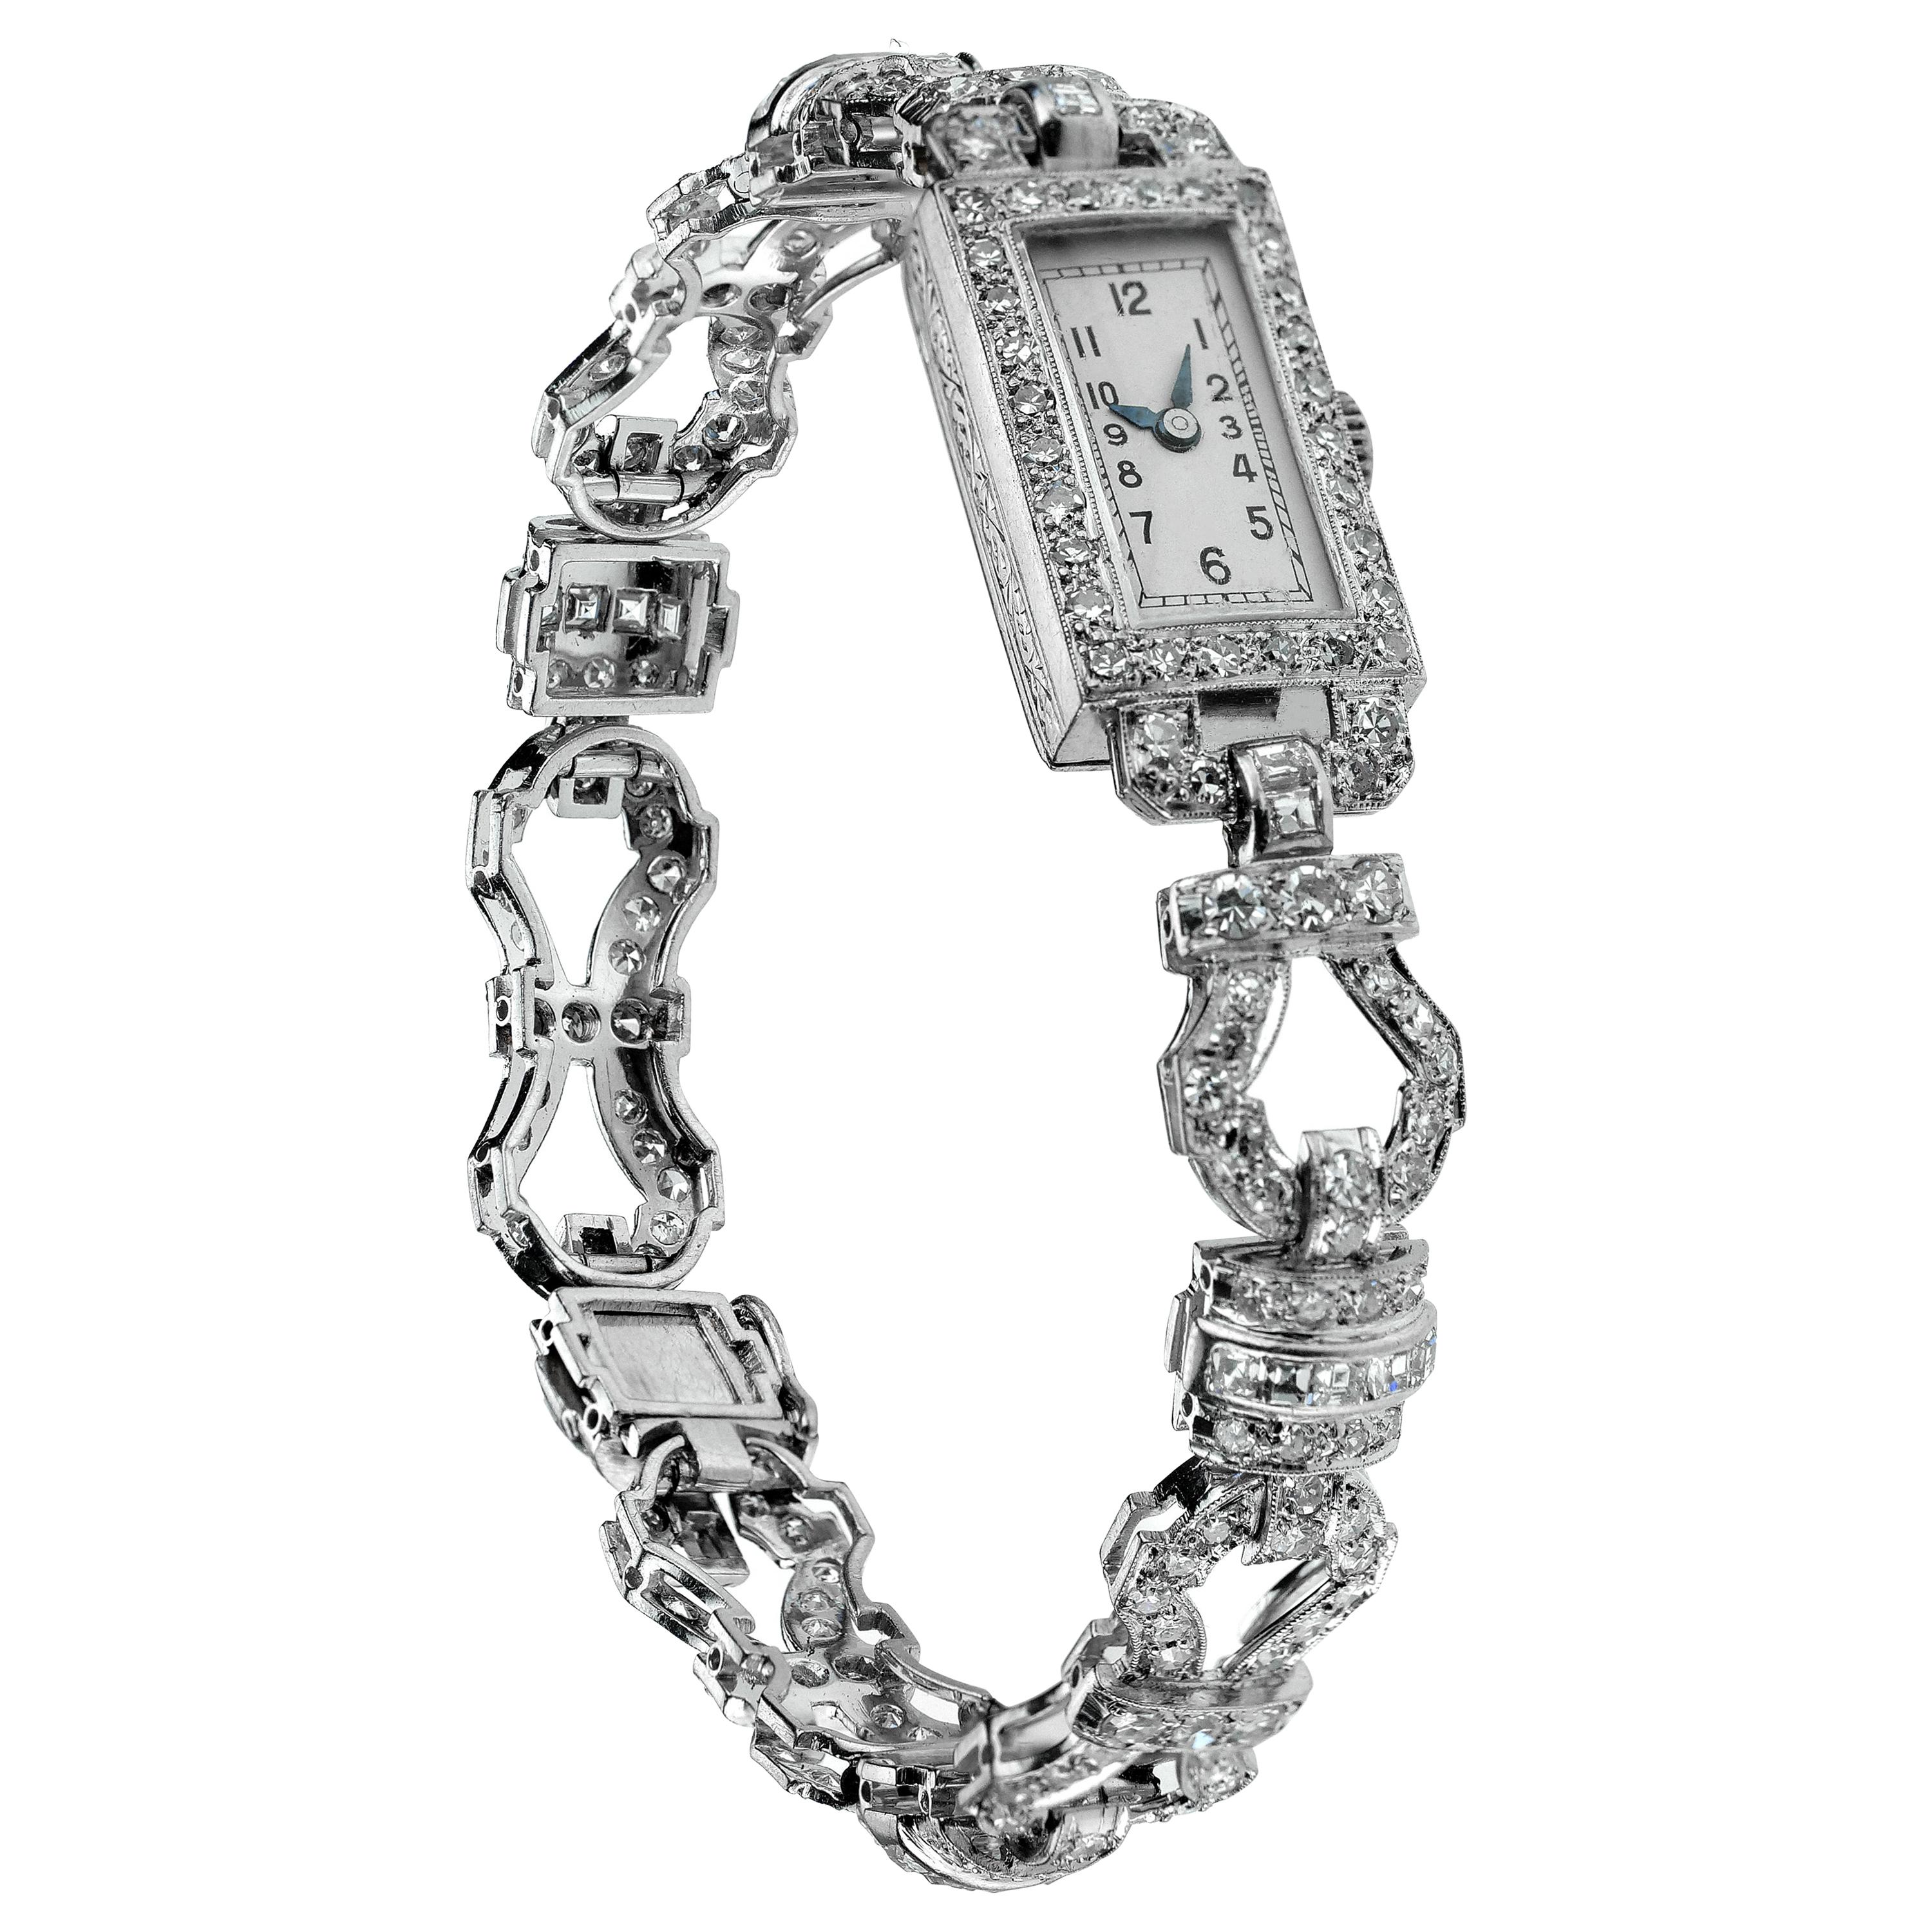 1920 Art Deco Diamond Dress Bracelet Watch in Platinum, Swiss Movement